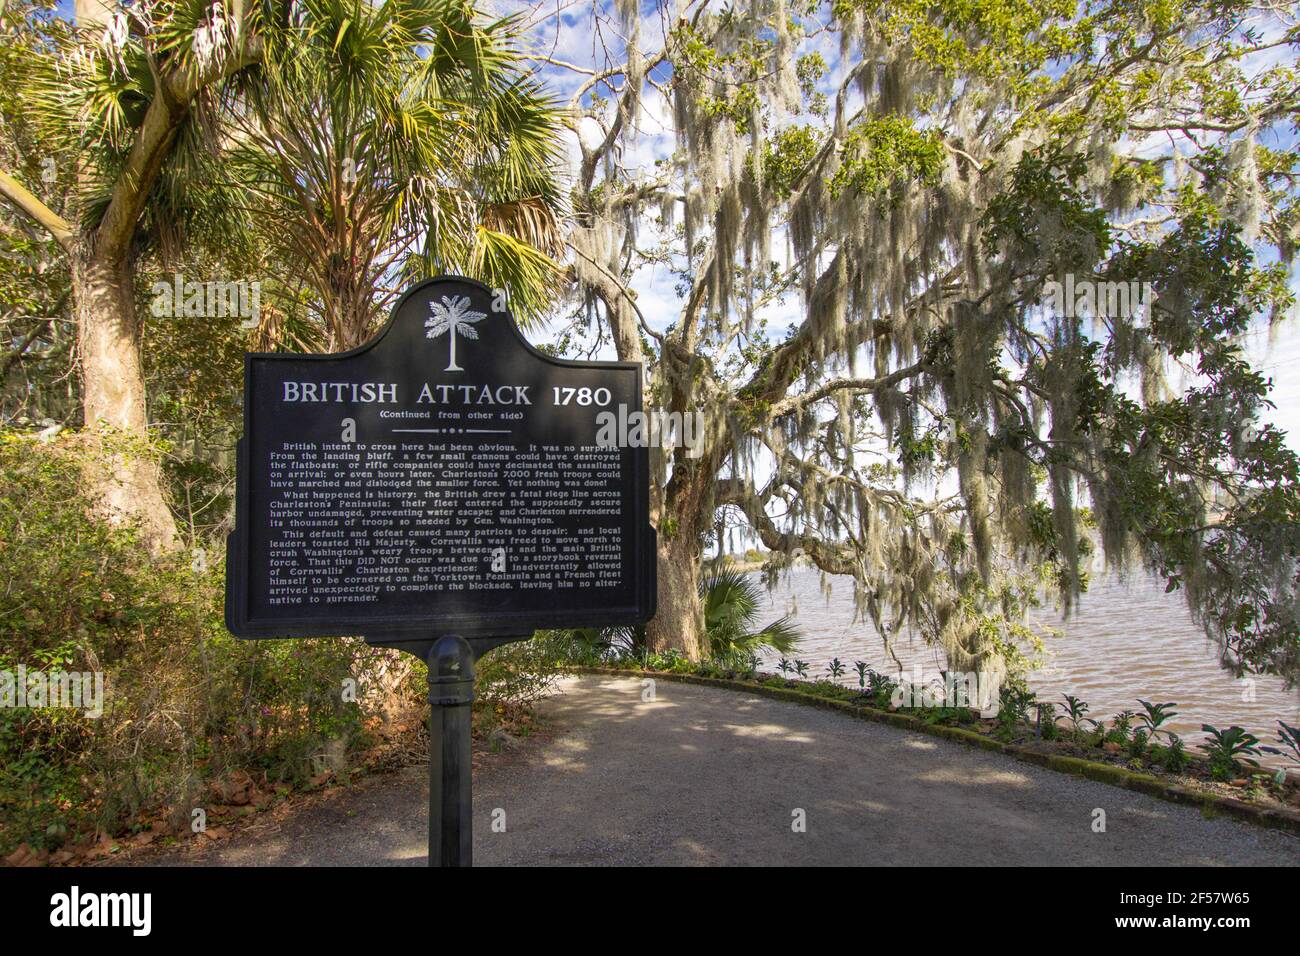 Historic marker commemorating the British Attack of 1780 on the port of Charleston, South Carolina Stock Photo